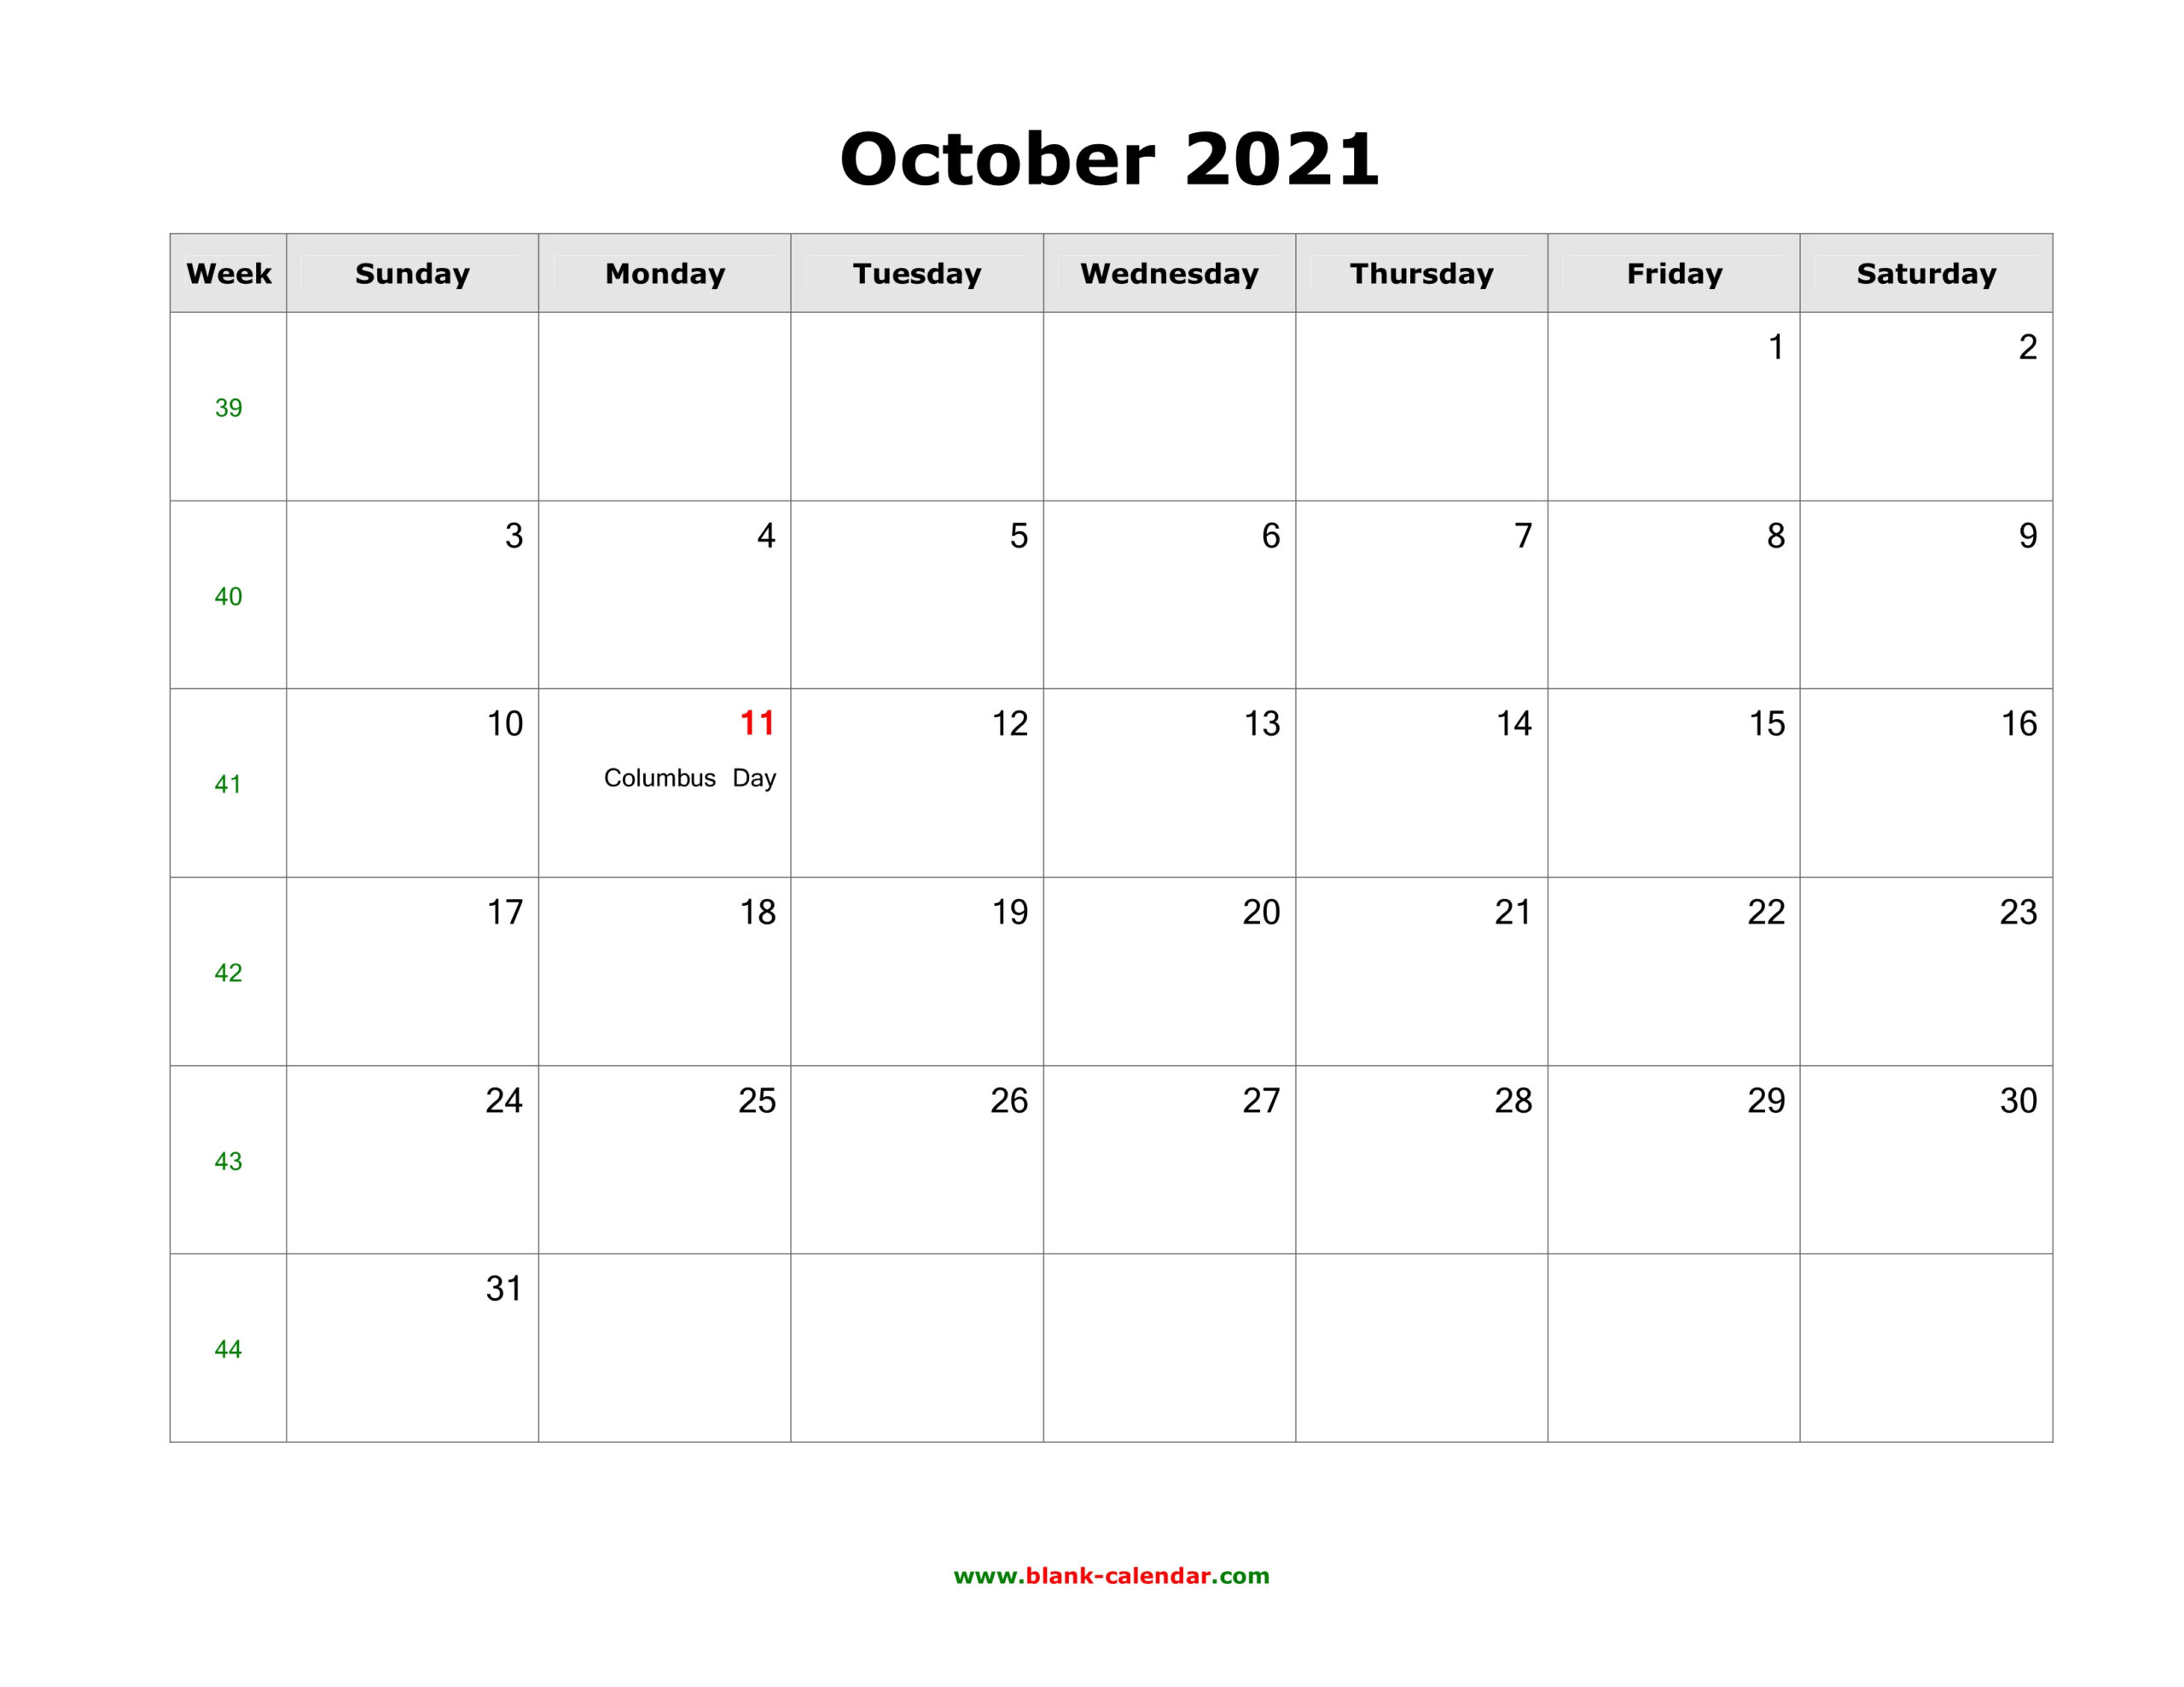 October 2021 Blank Calendar | Free Download Calendar Templates